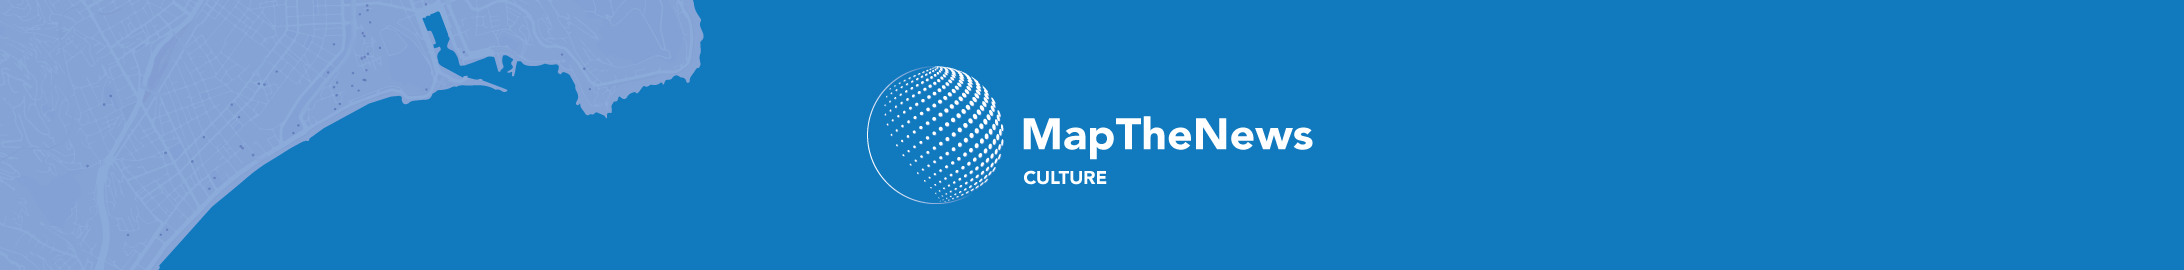 MapTheNews Culture